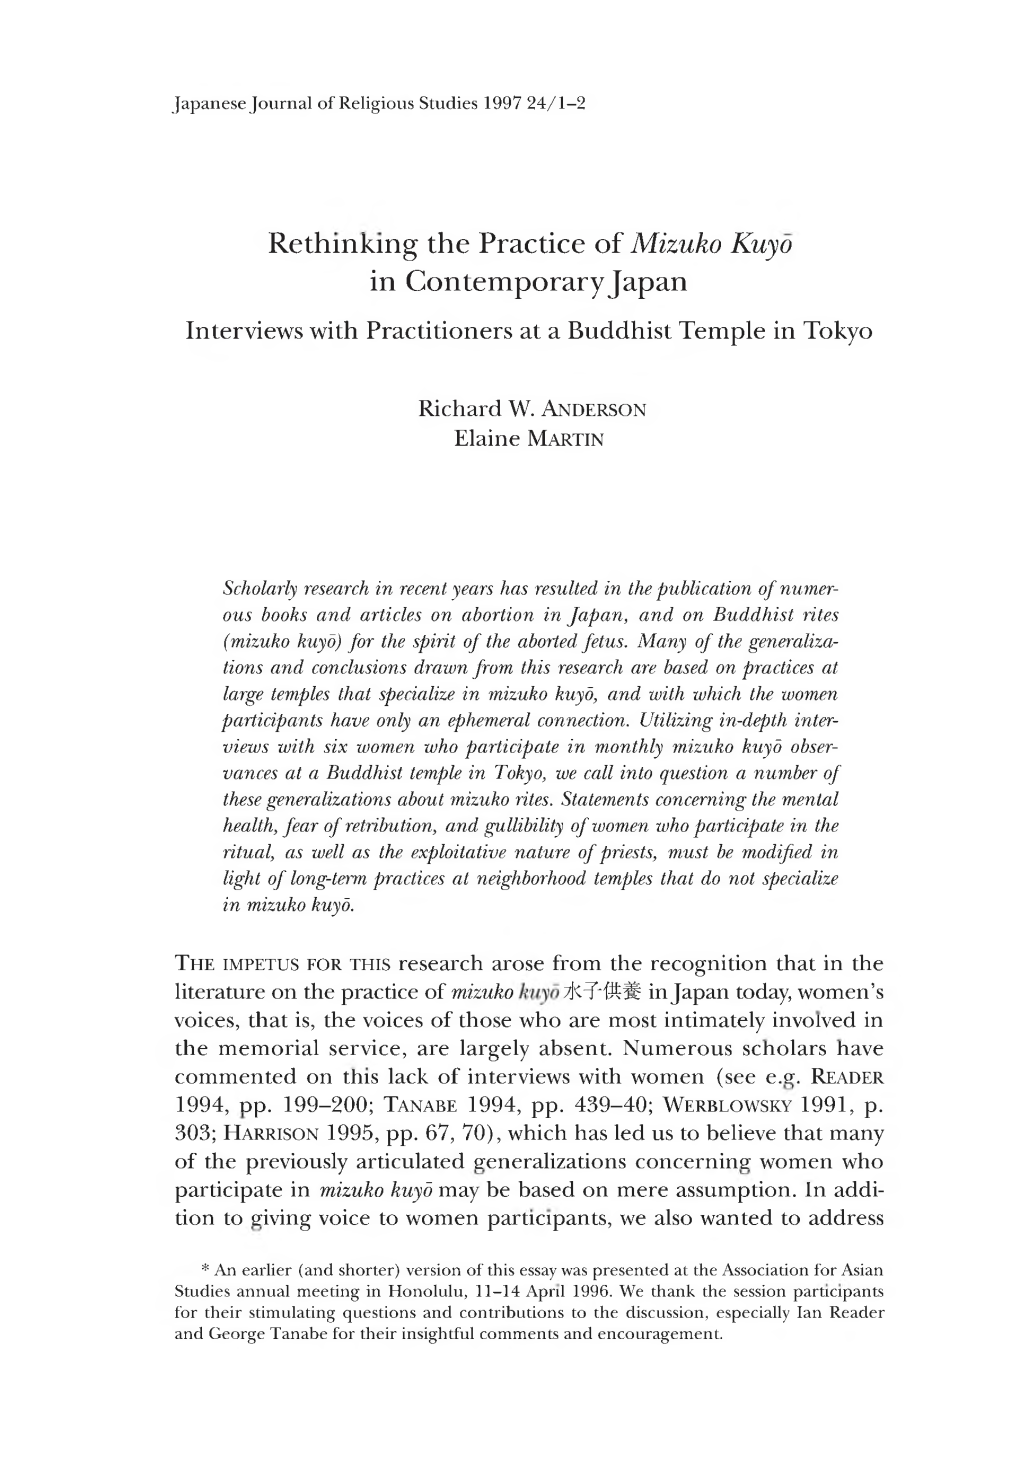 Rethinking the Practice of Mizuho Kuyo in Contemporary Japan